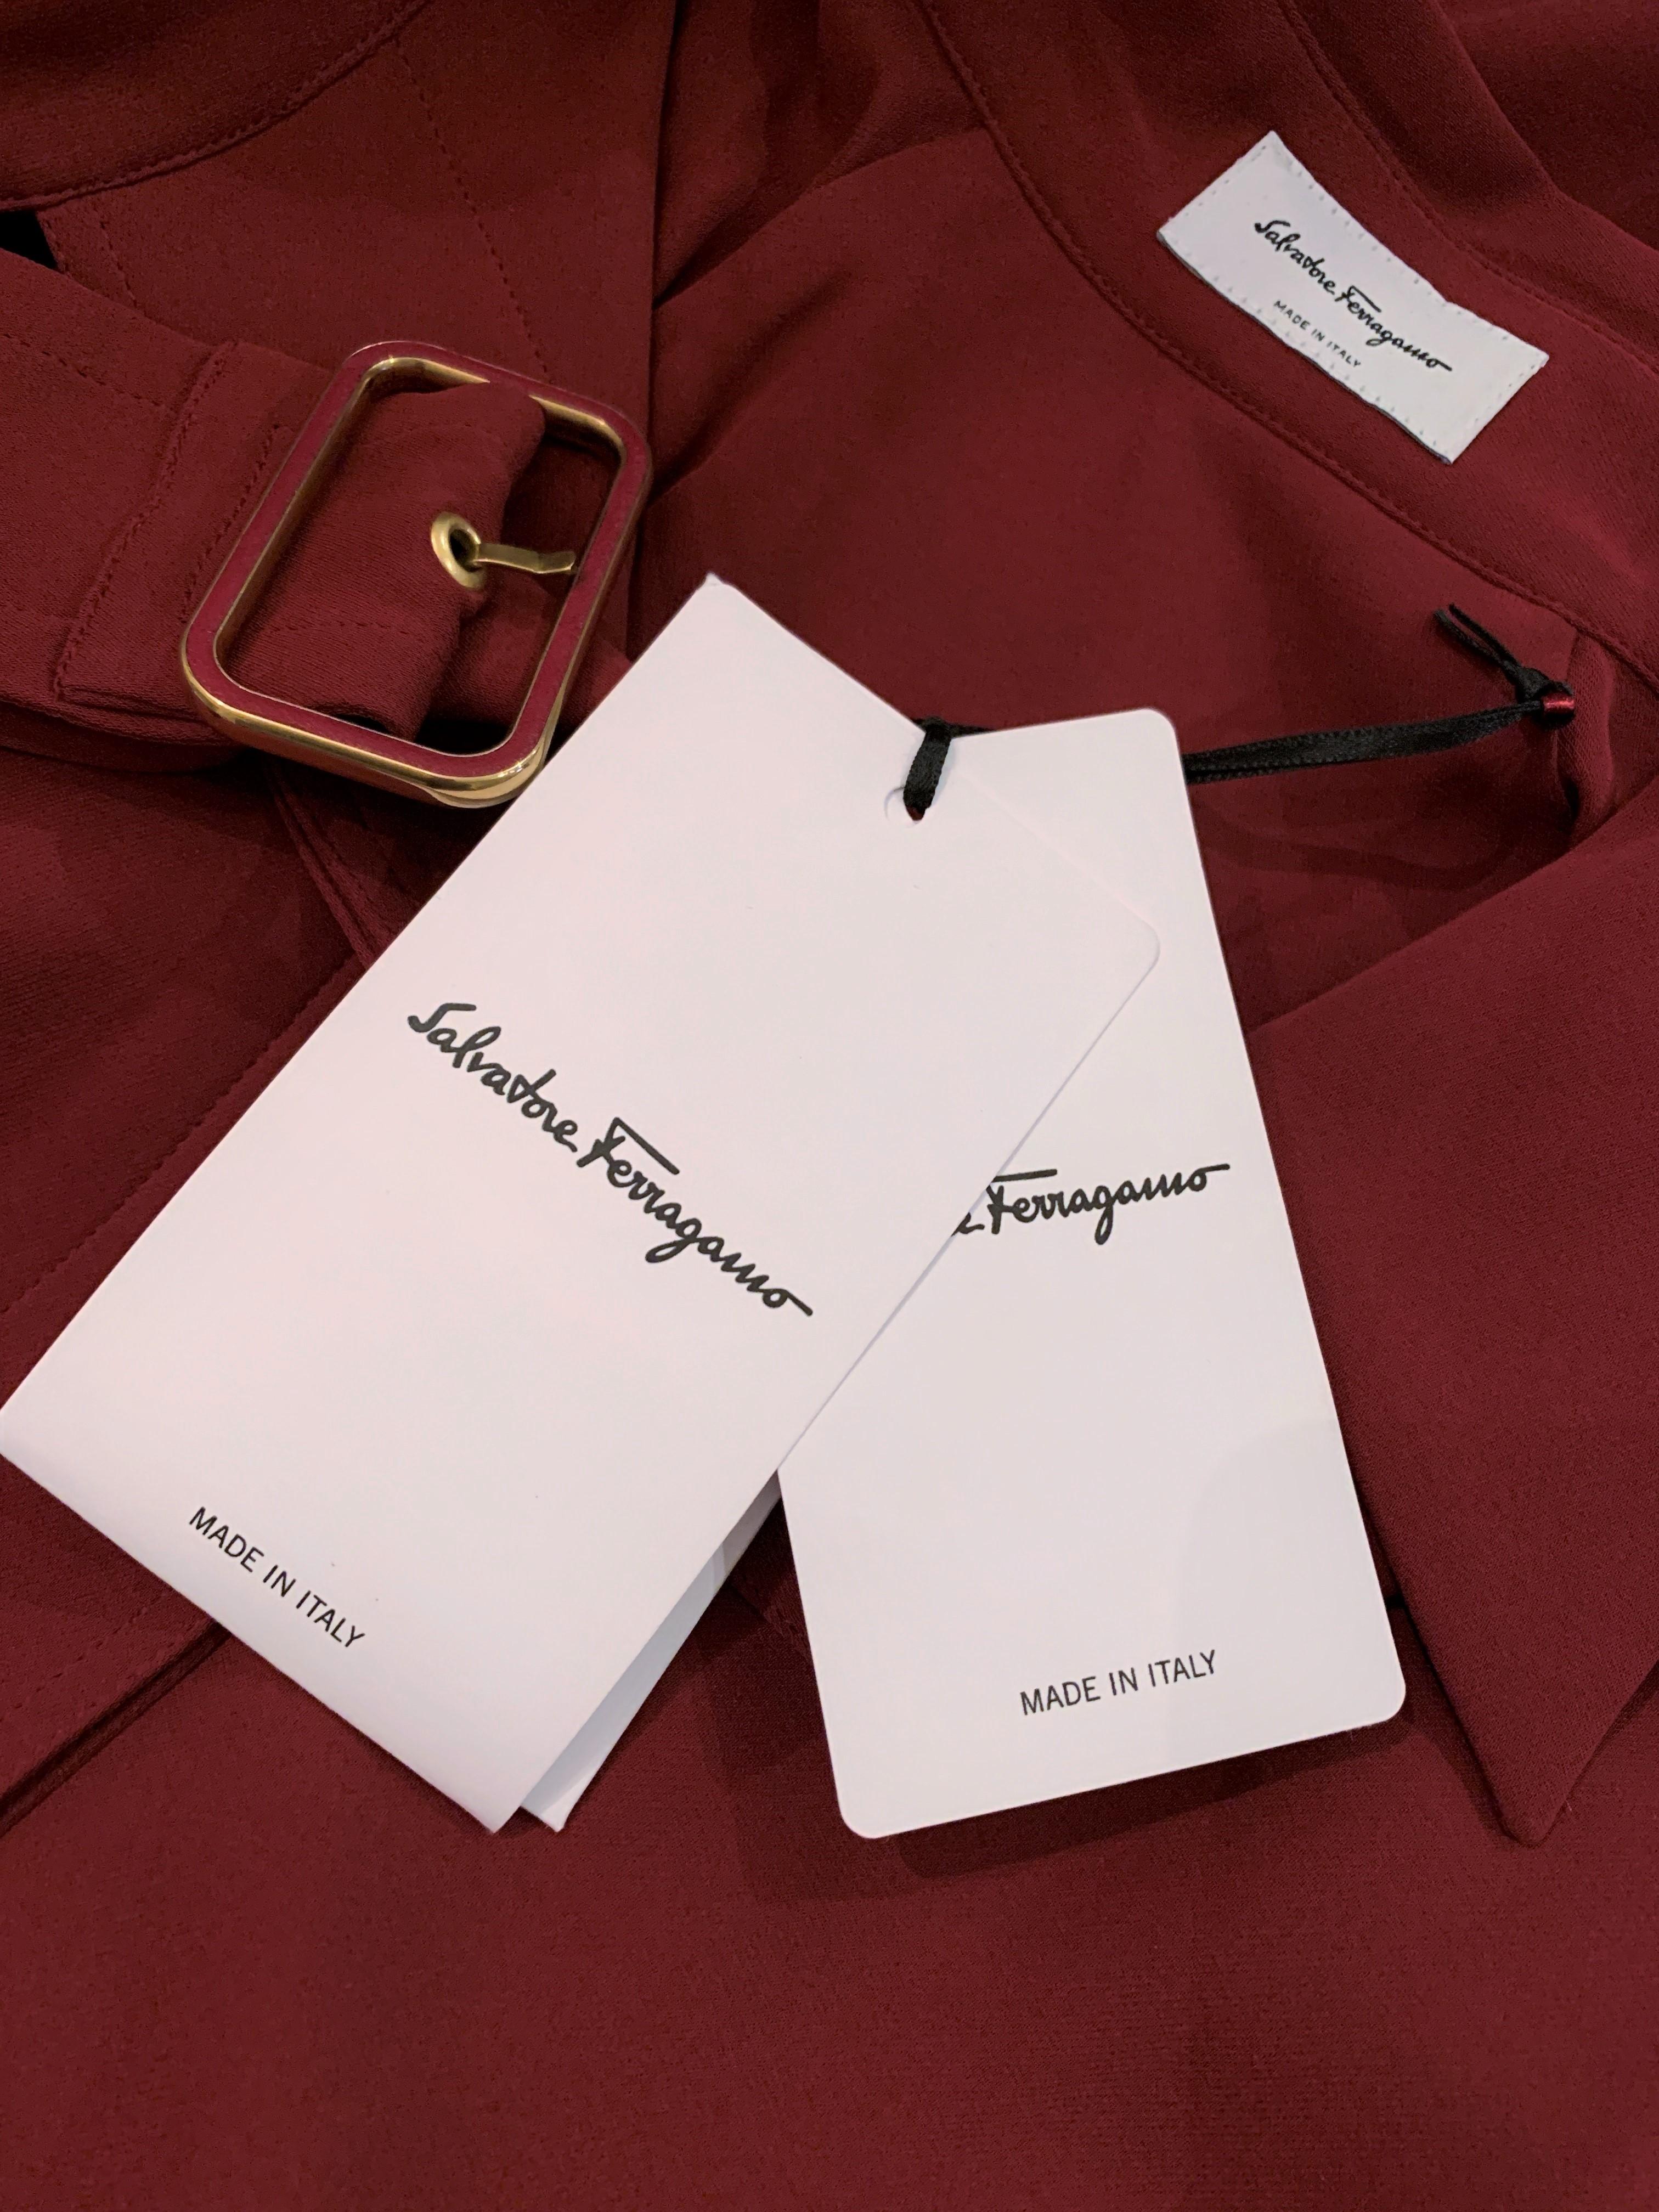 New Rare Salvatore Ferragamo Red Silk Dress F/W 2018  With Tags $3200 Sz 42 4